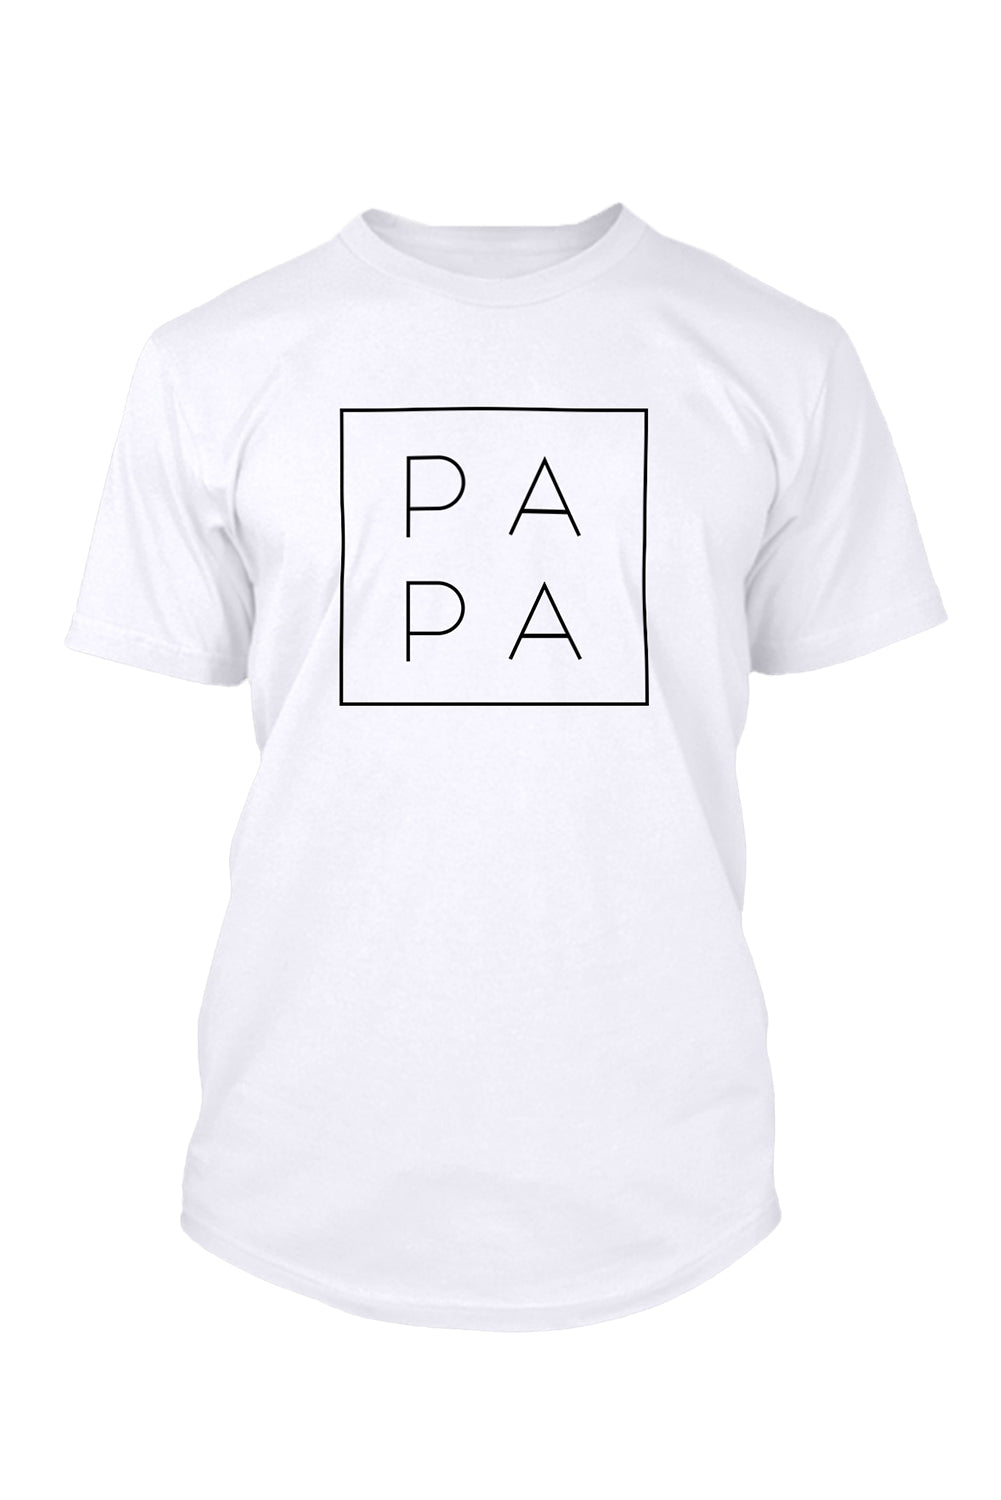 PAPA Letter Print Crewneck Short Sleeve Men's T Shirt